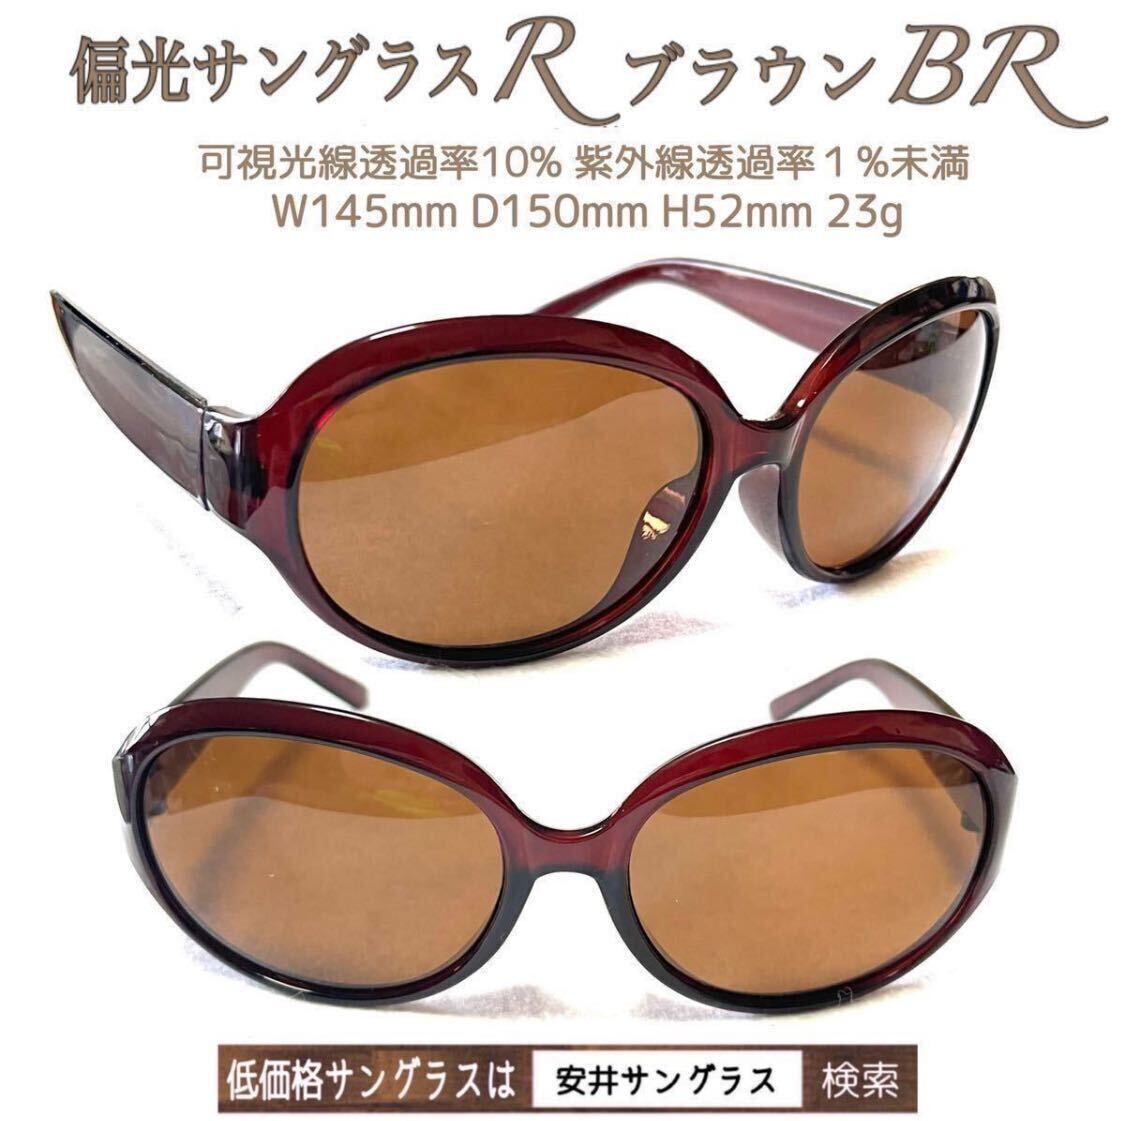 2 pcs set polarized light sunglasses R black Brown each 1 pcs cheap . sunglasses goggle ru